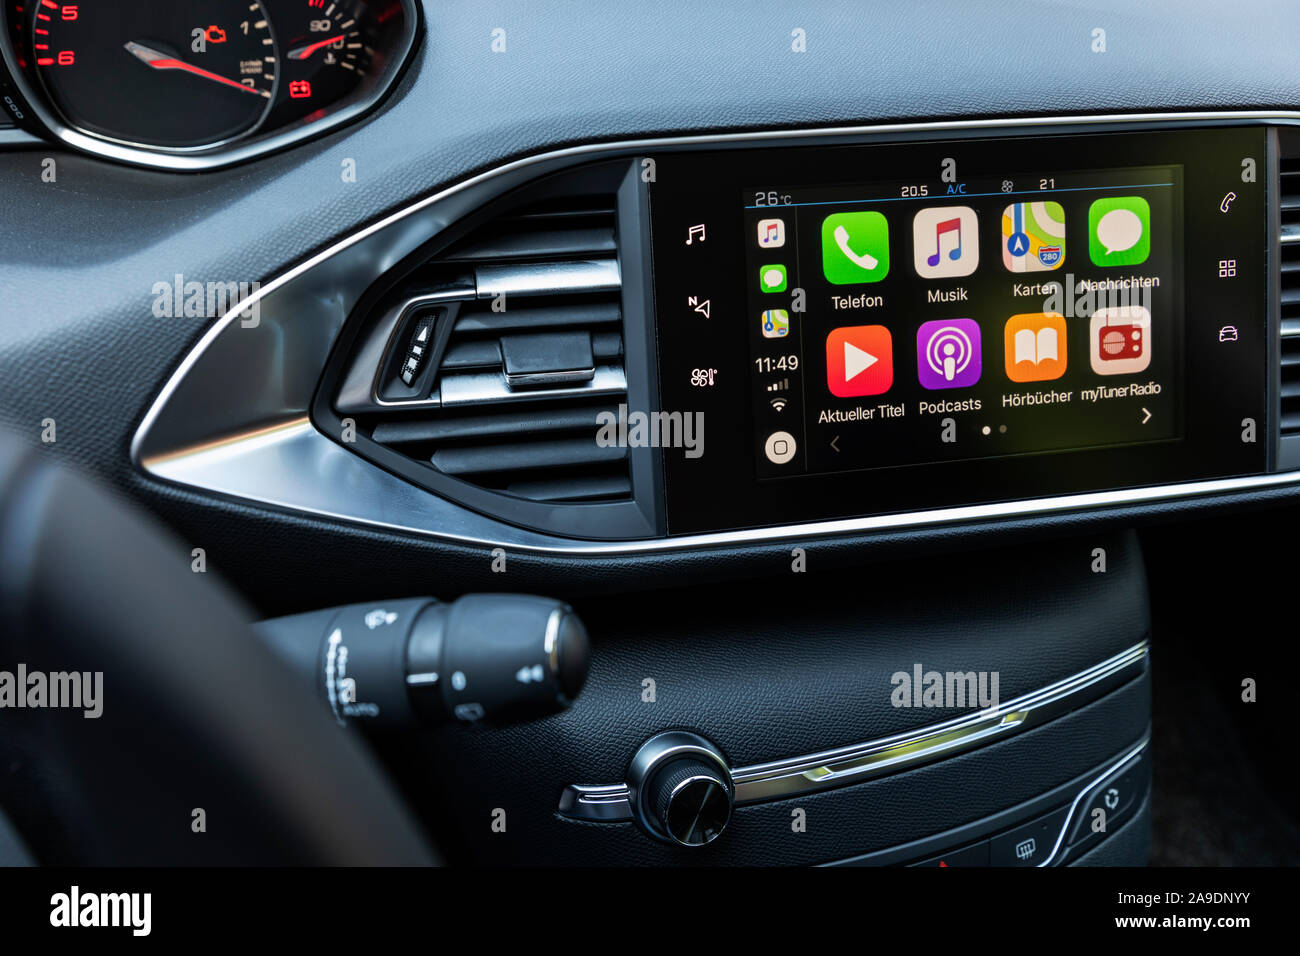 Apple CarPlay, Display, Touchscreen, Dashboard, iPhone X, Car